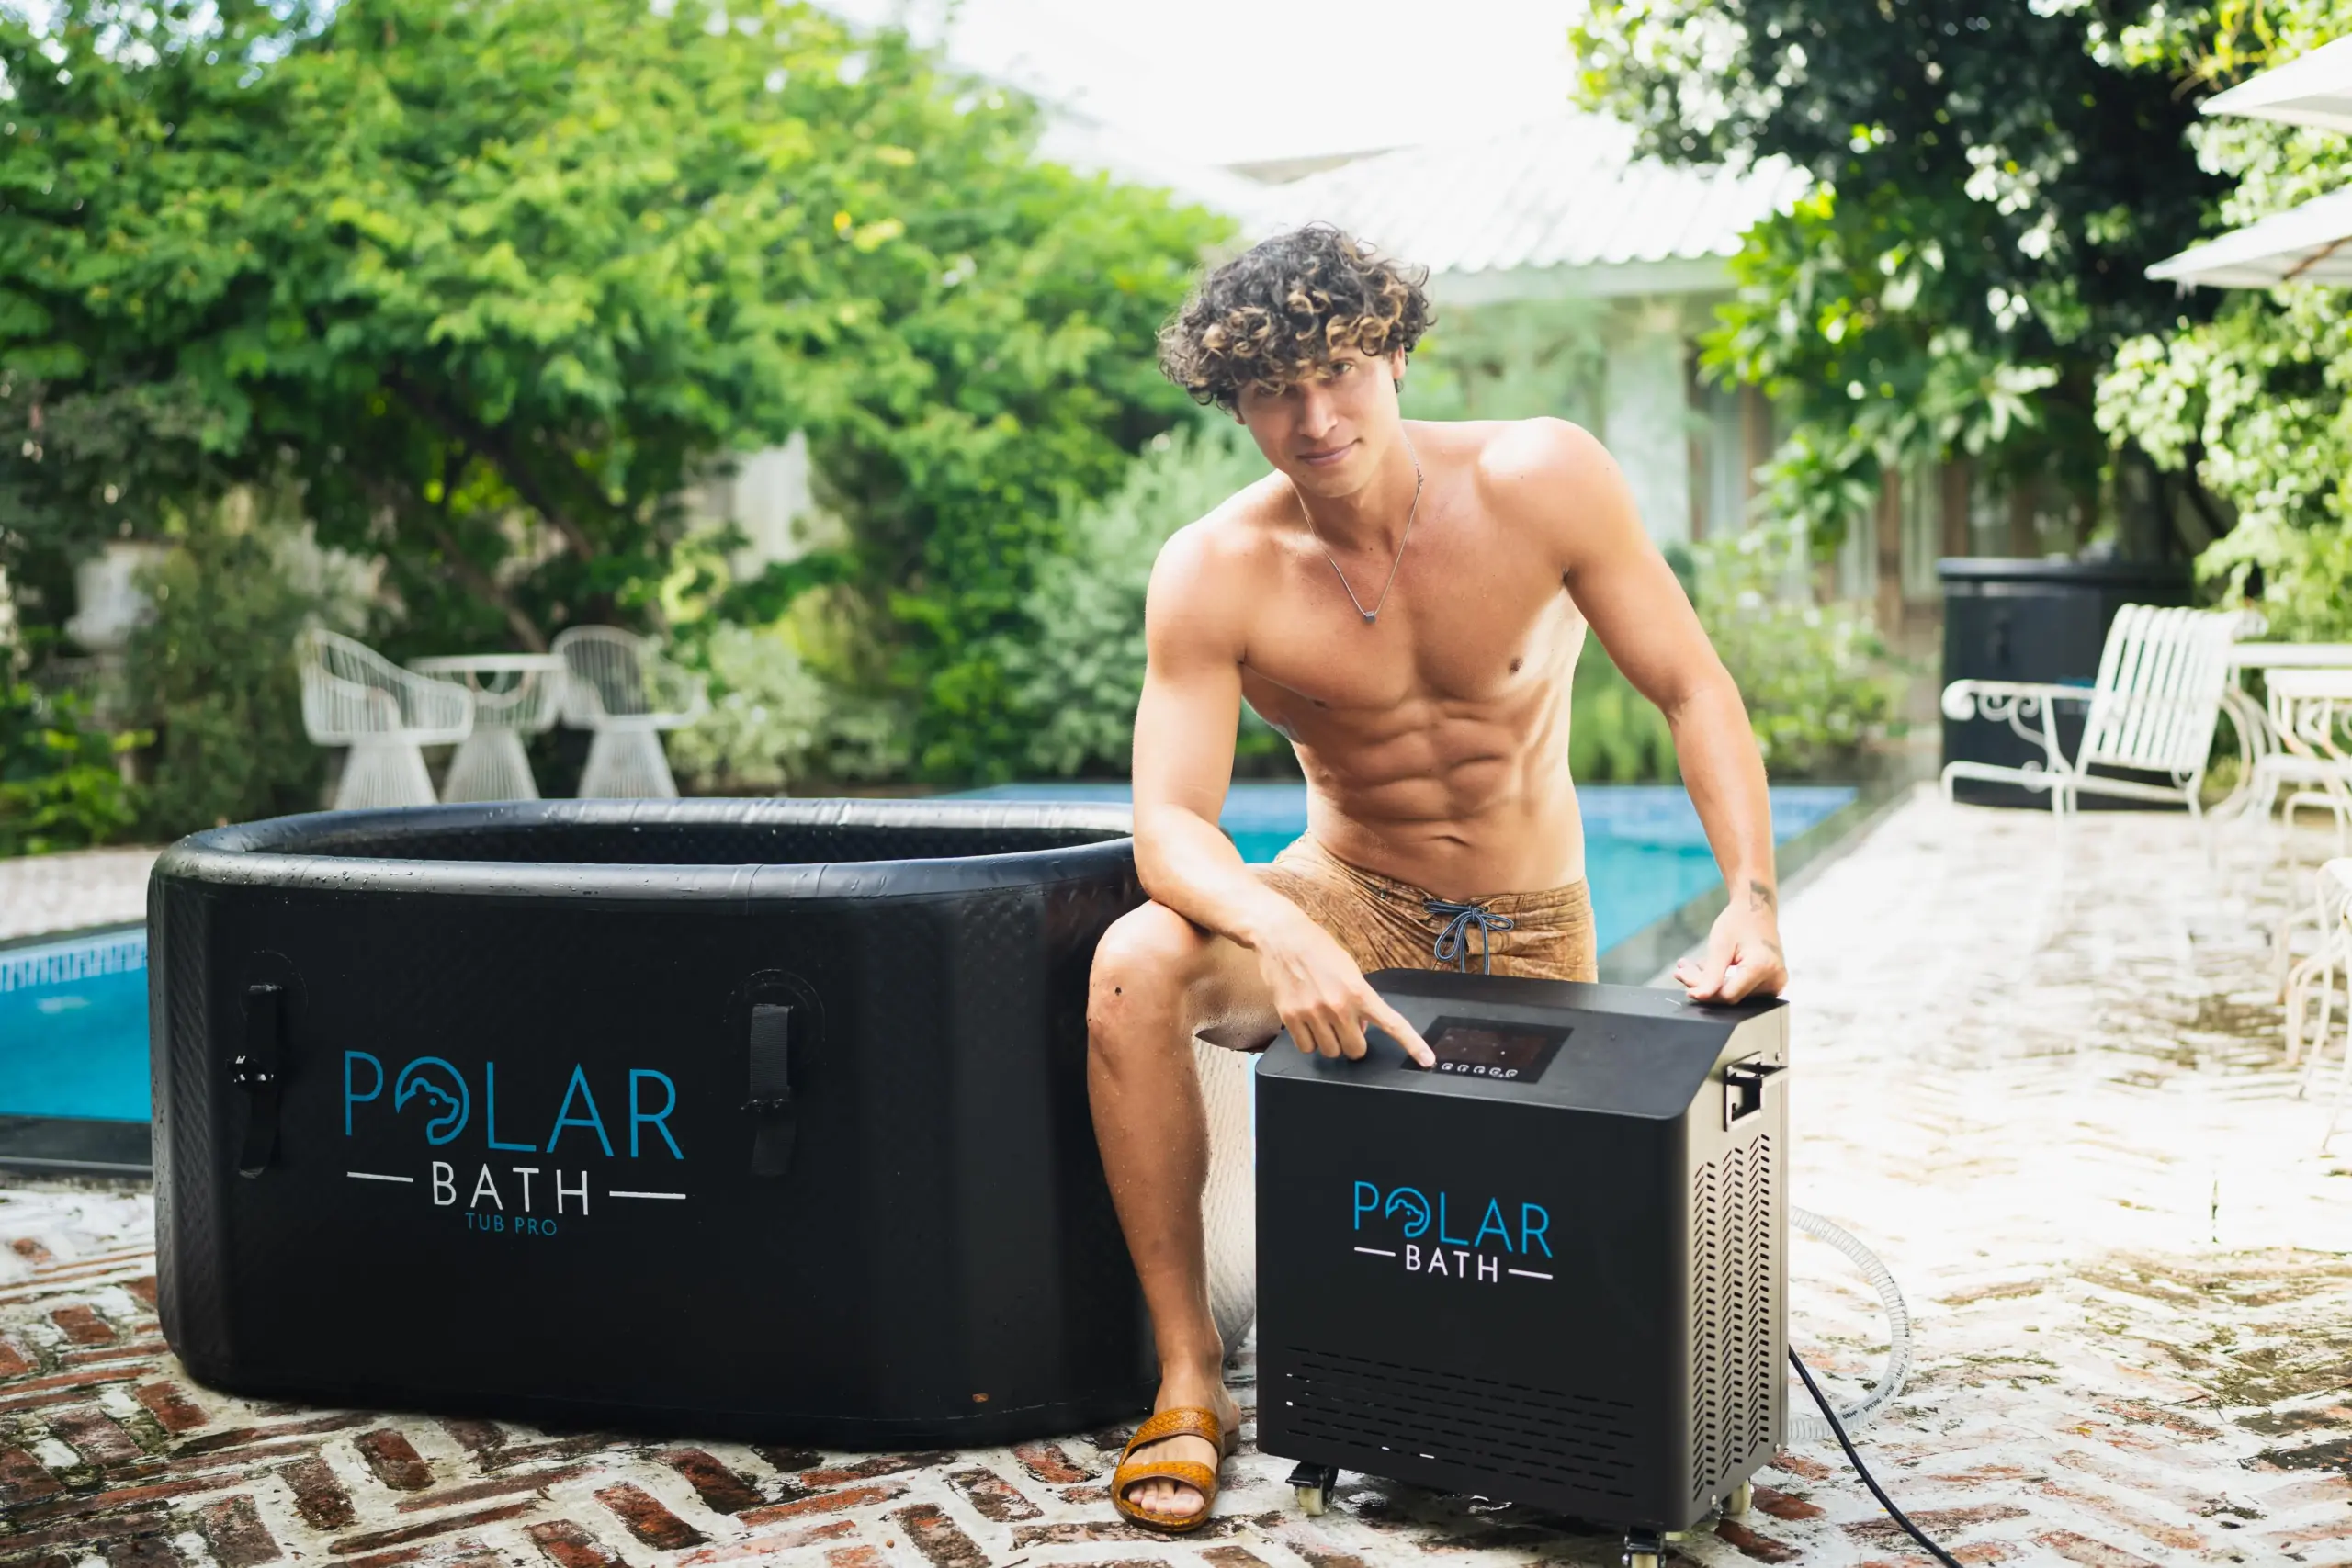 Polar Bath Tub for a luxurious plunge